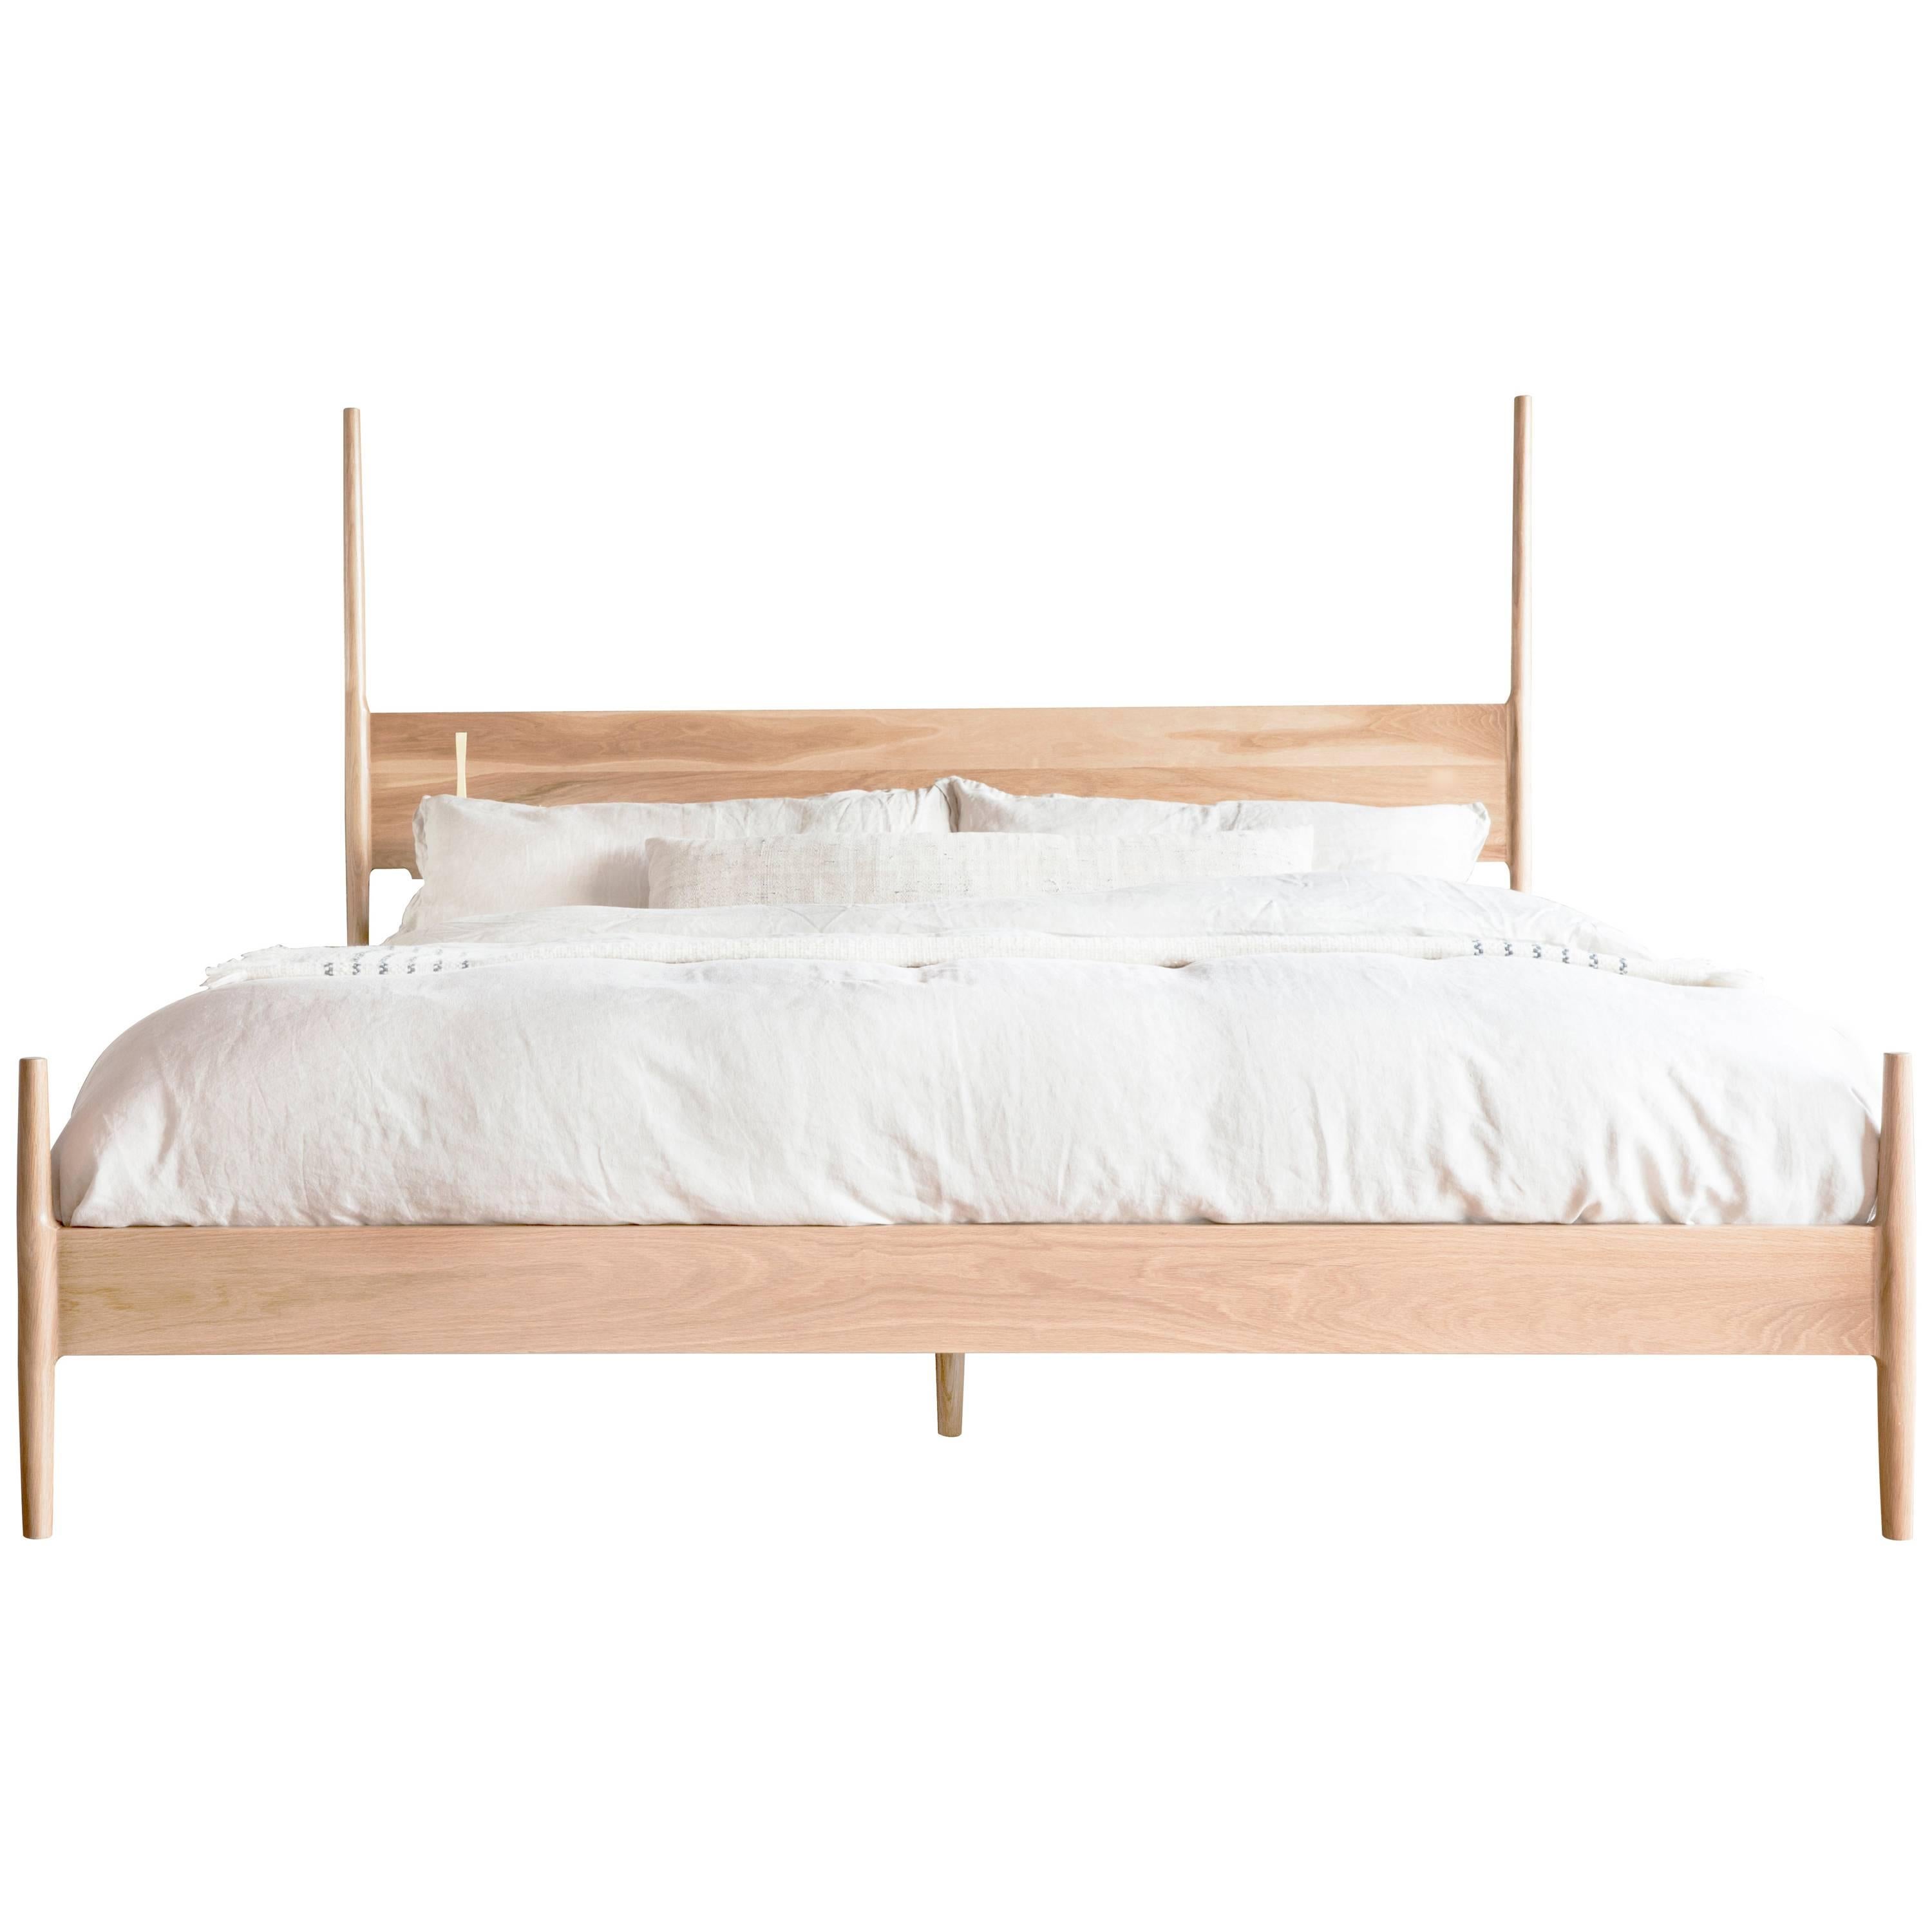 Handcrafted Mid-Century Modern Dansk Bed